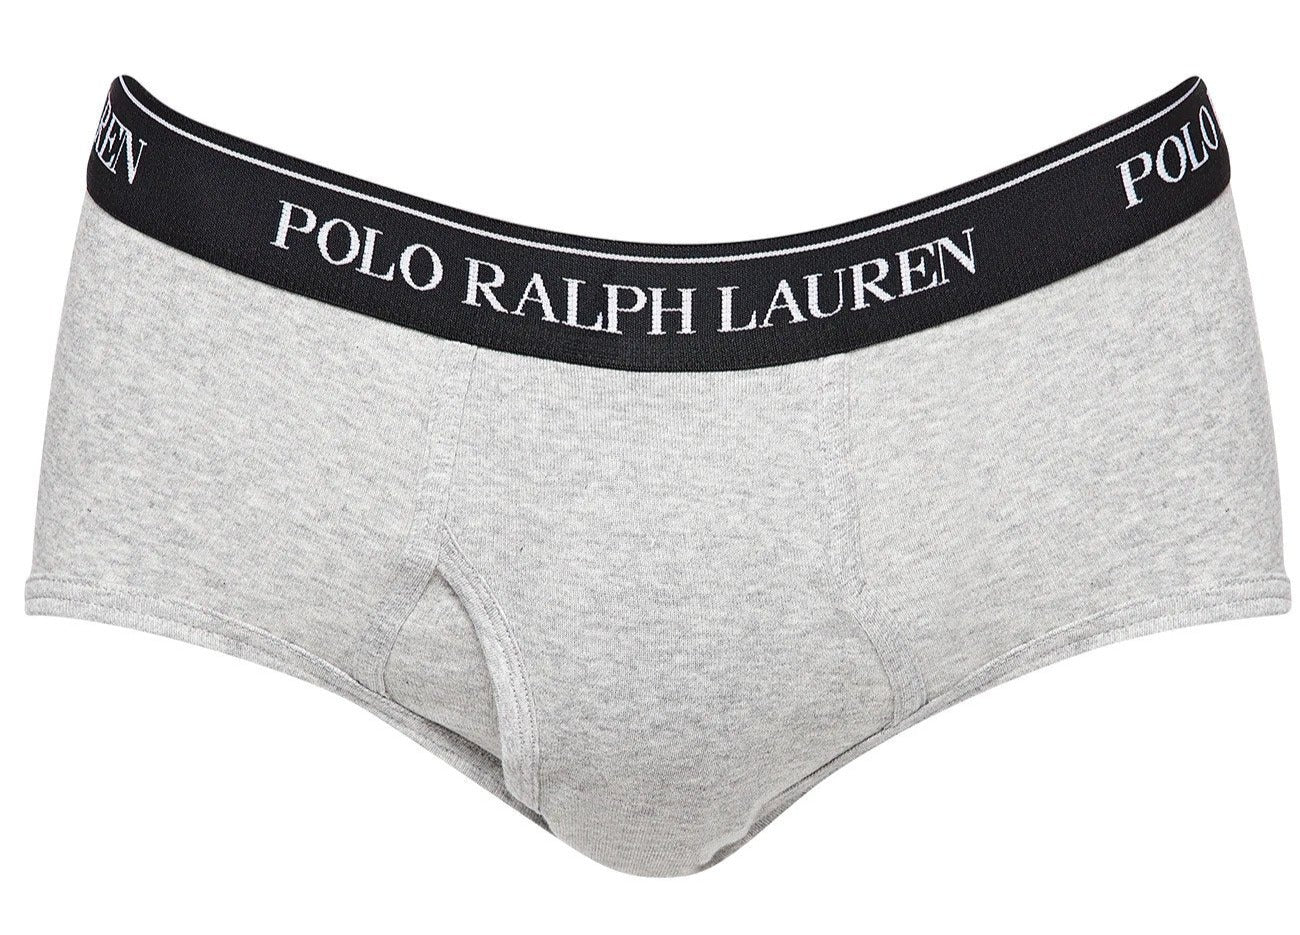 Polo Ralph Lauren Men's Mid-Rise Brief 4-Pack - Grey/Black